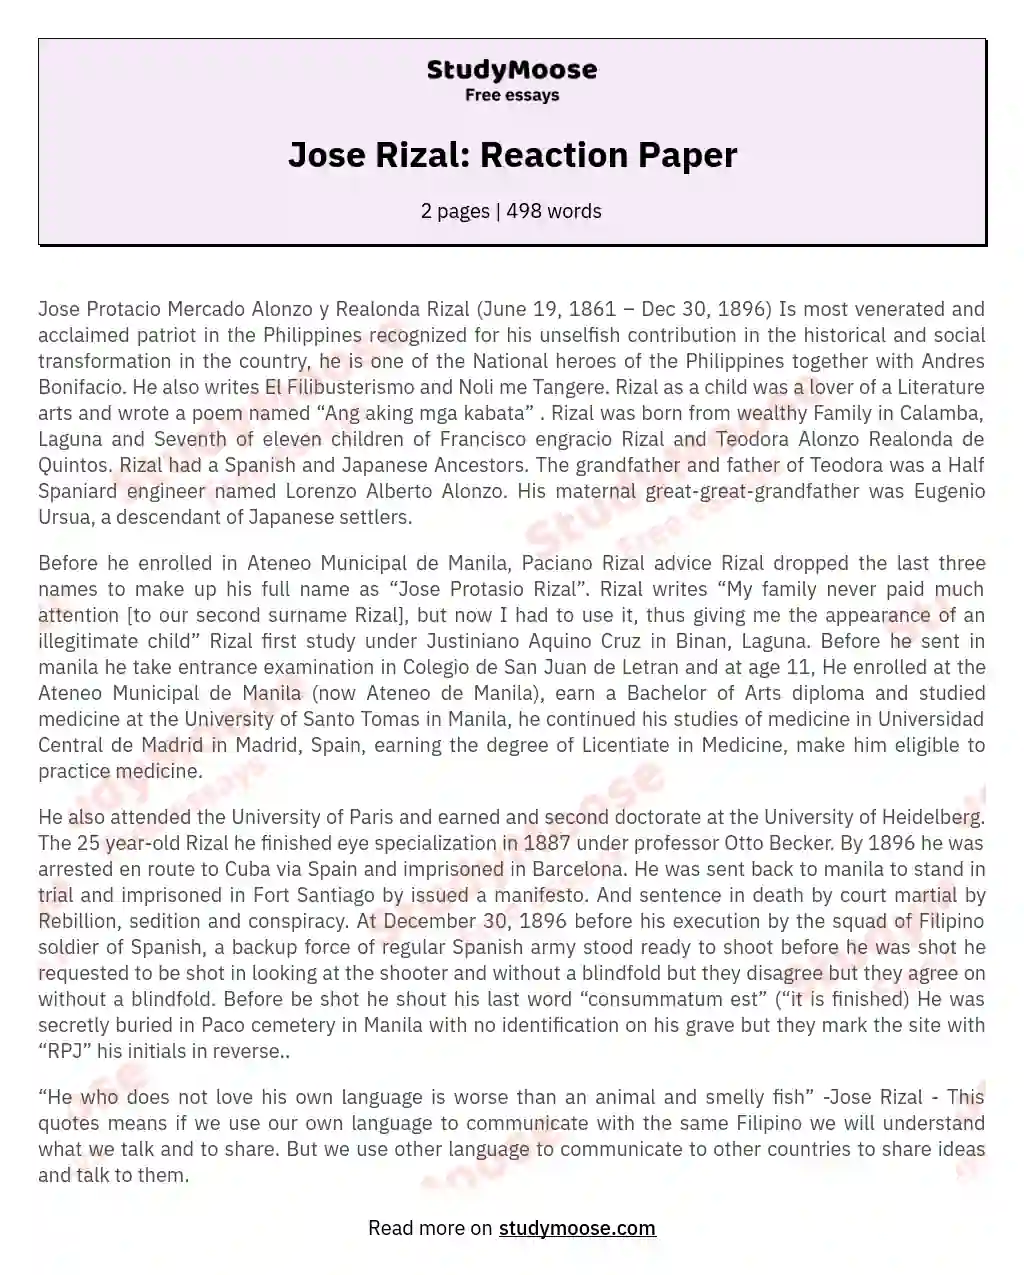 Jose Rizal: Reaction Paper essay